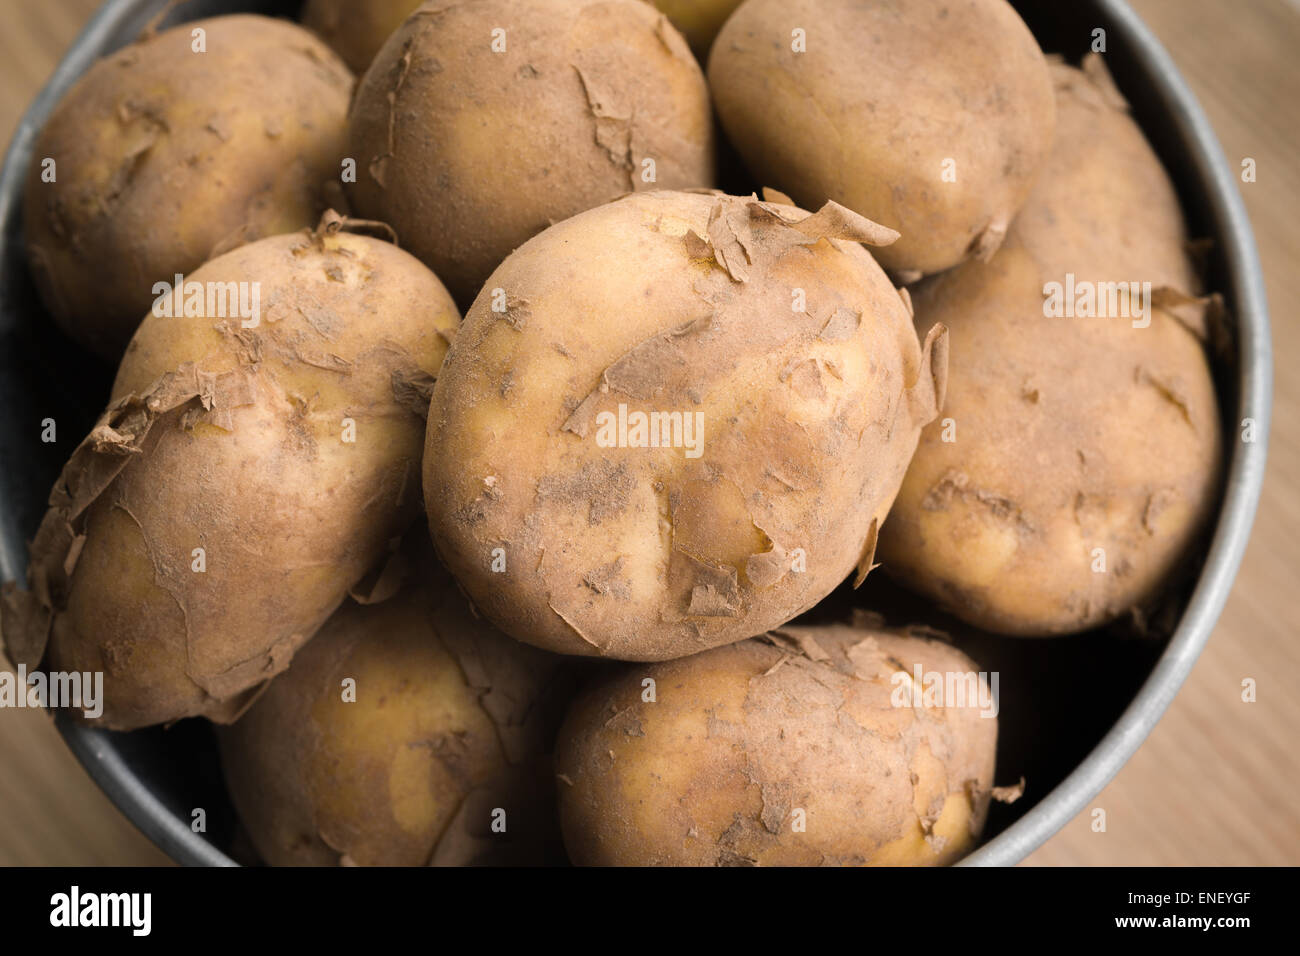 growing jersey royal potatoes